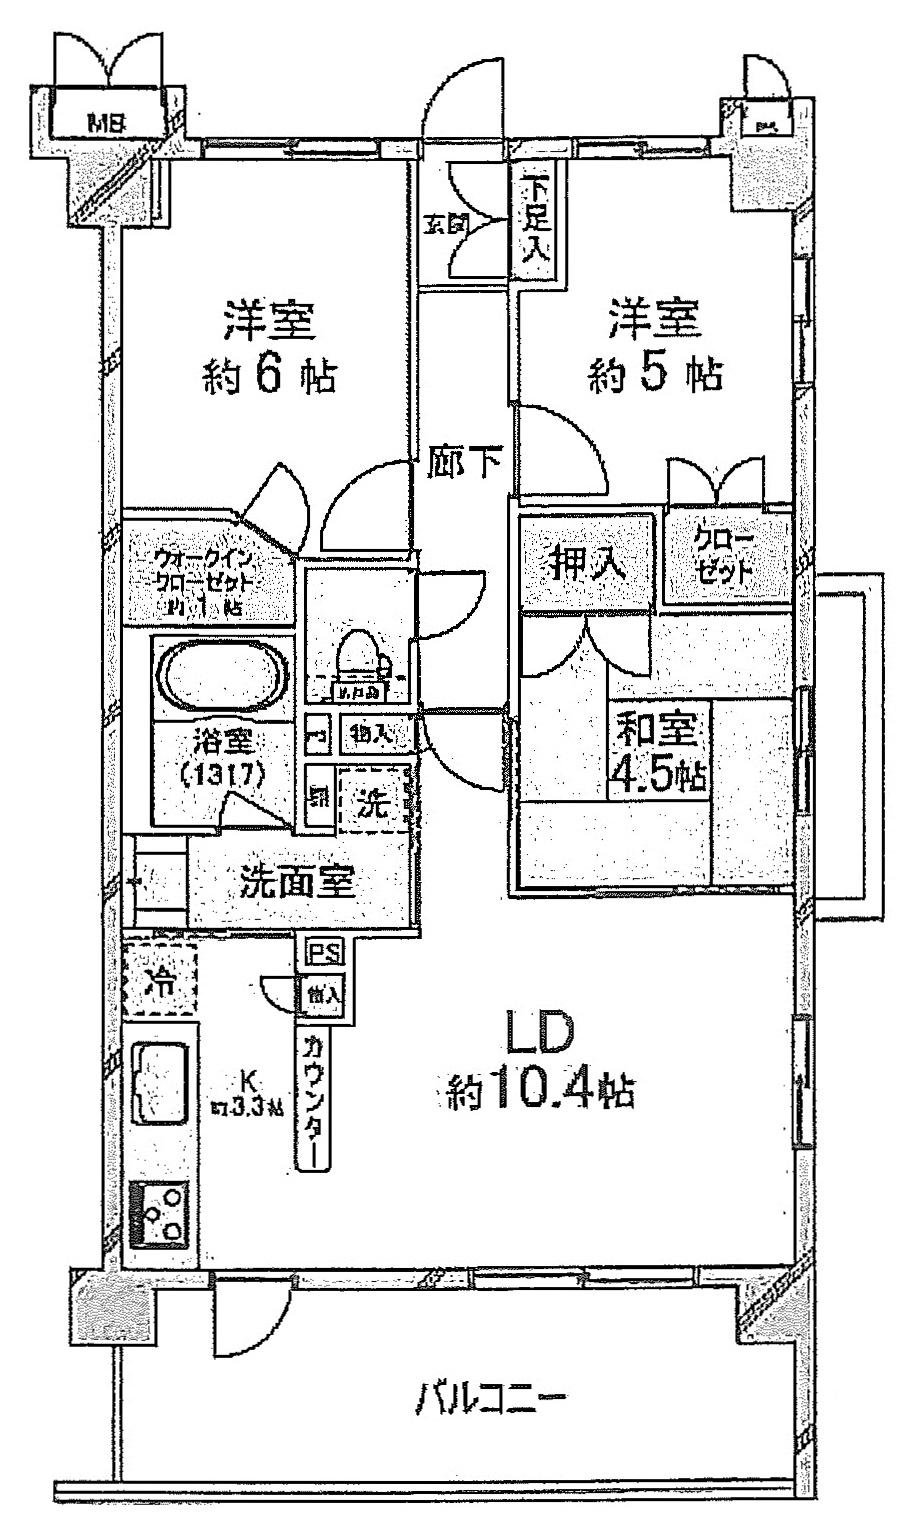 Floor plan. 3LDK, Price 13,900,000 yen, Footprint 65.1 sq m , Balcony area 12.4 sq m